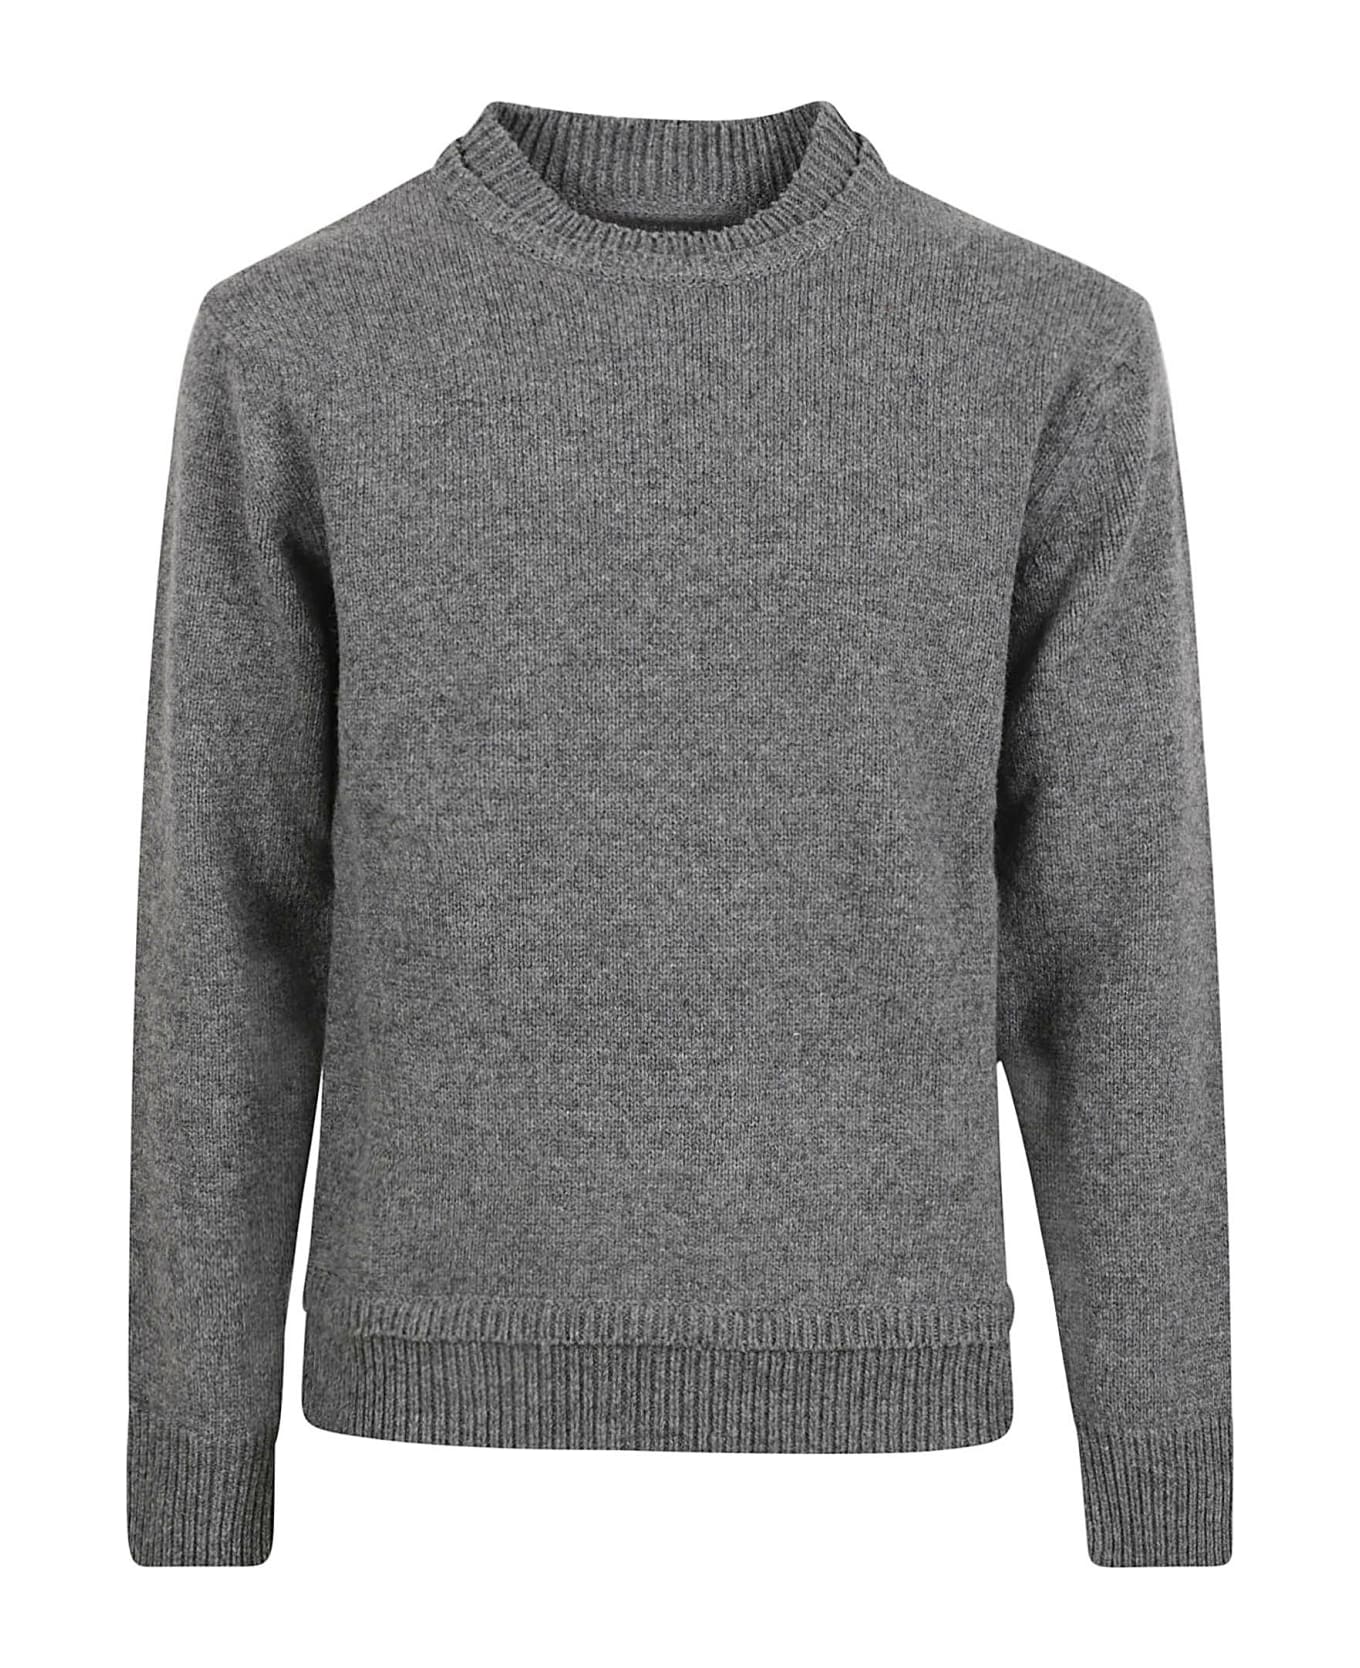 Maison Margiela Elbow Patch Sweater - MEDIUM GREY ニットウェア